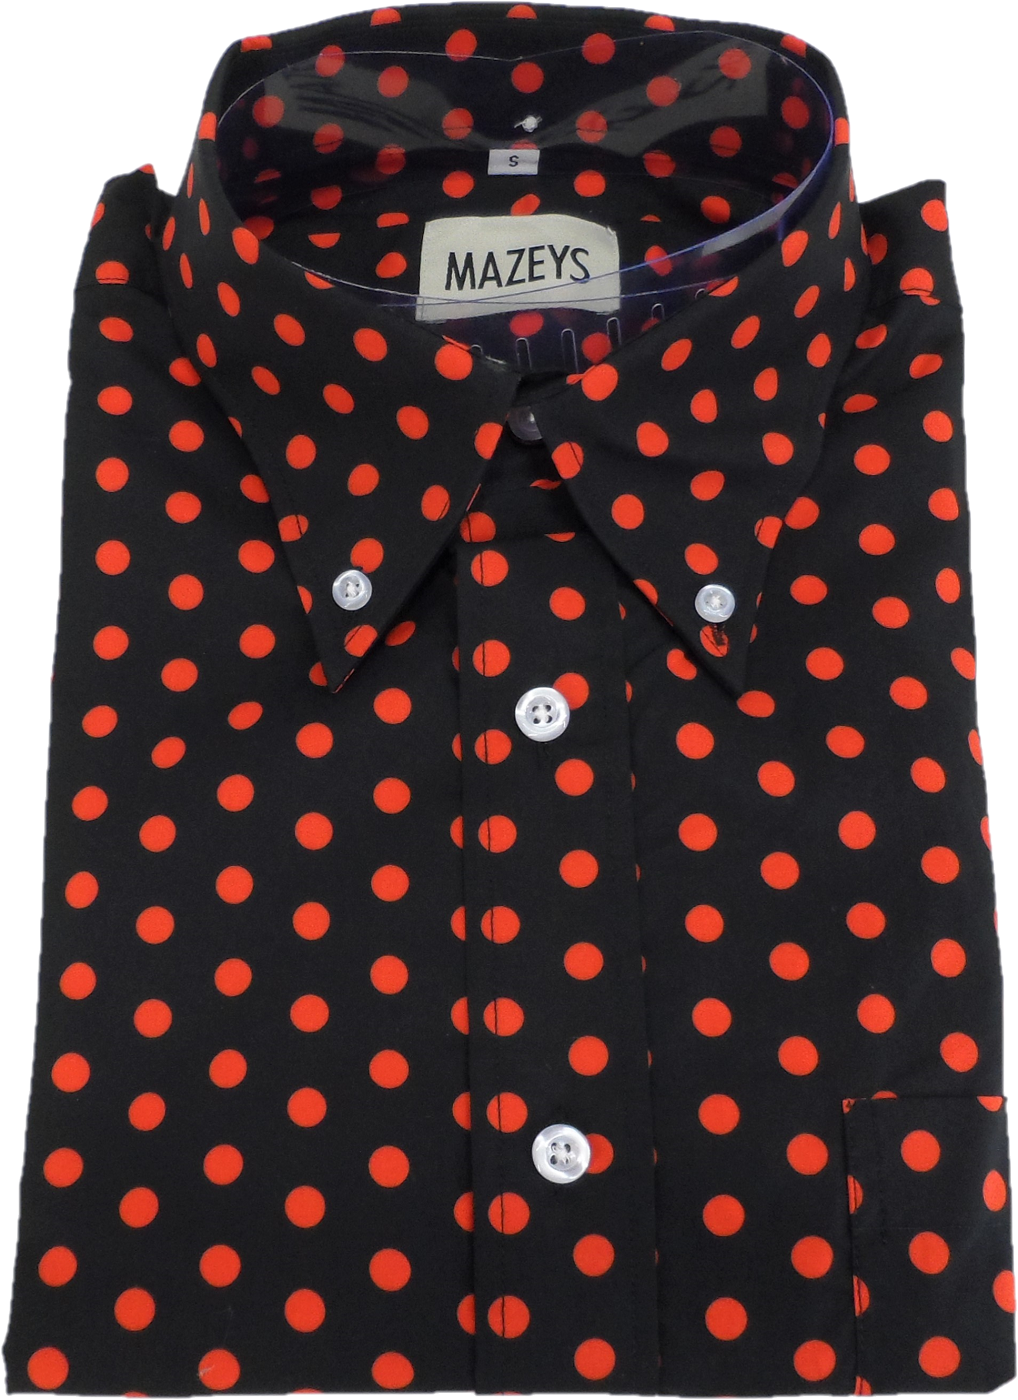 Mazeysメンズ 黒と赤のレトロモッズポルカドット 100% コットンシャツ…